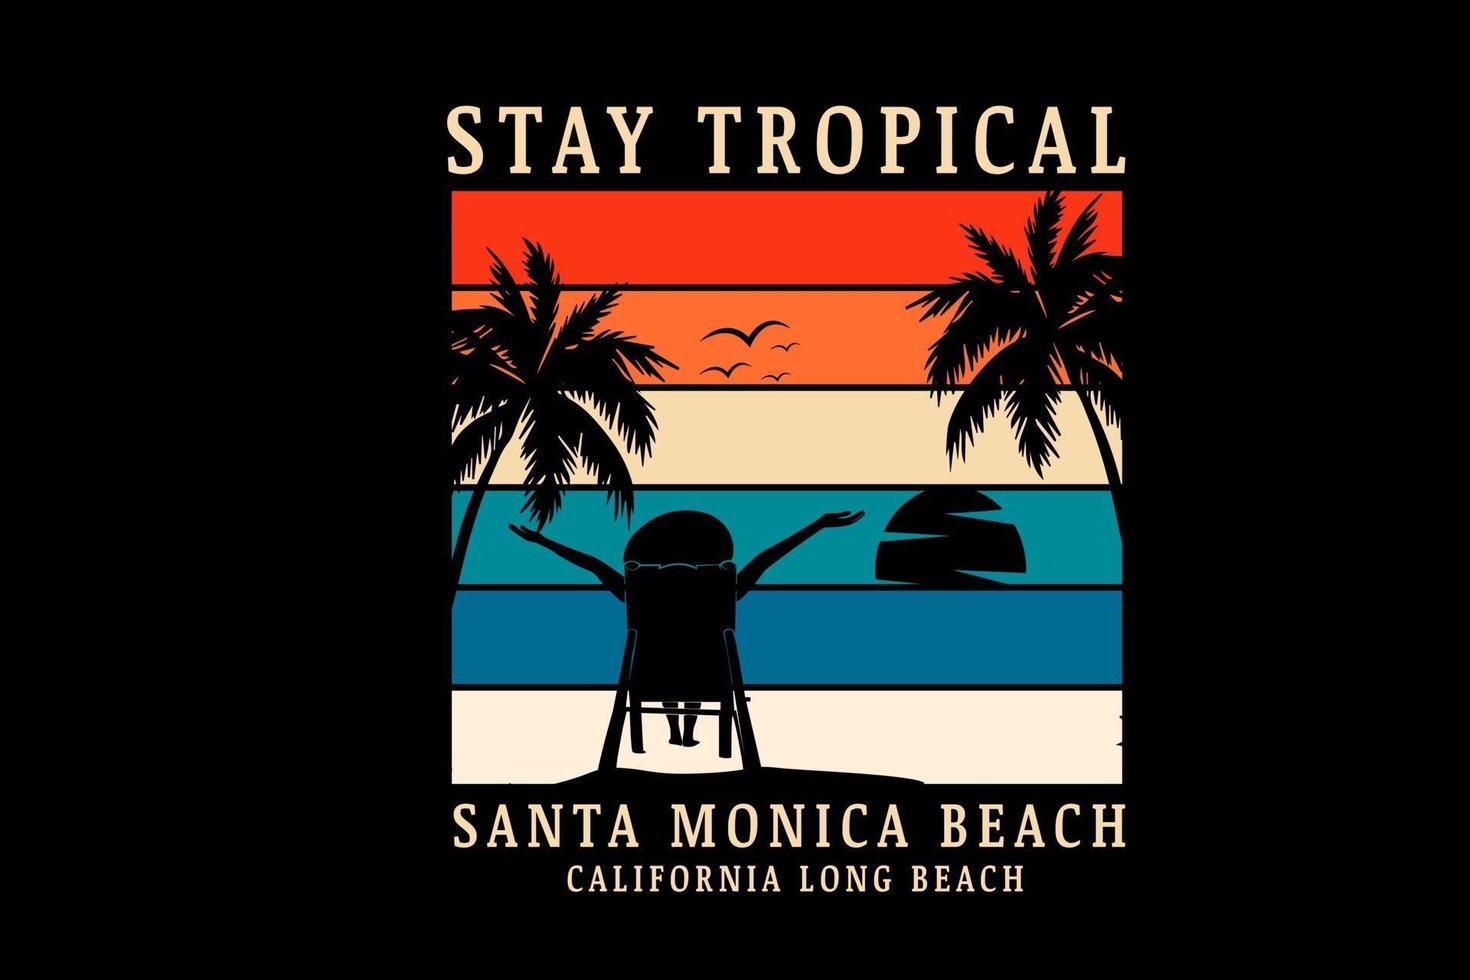 stay tropical santa monica beach color orange and blue vector